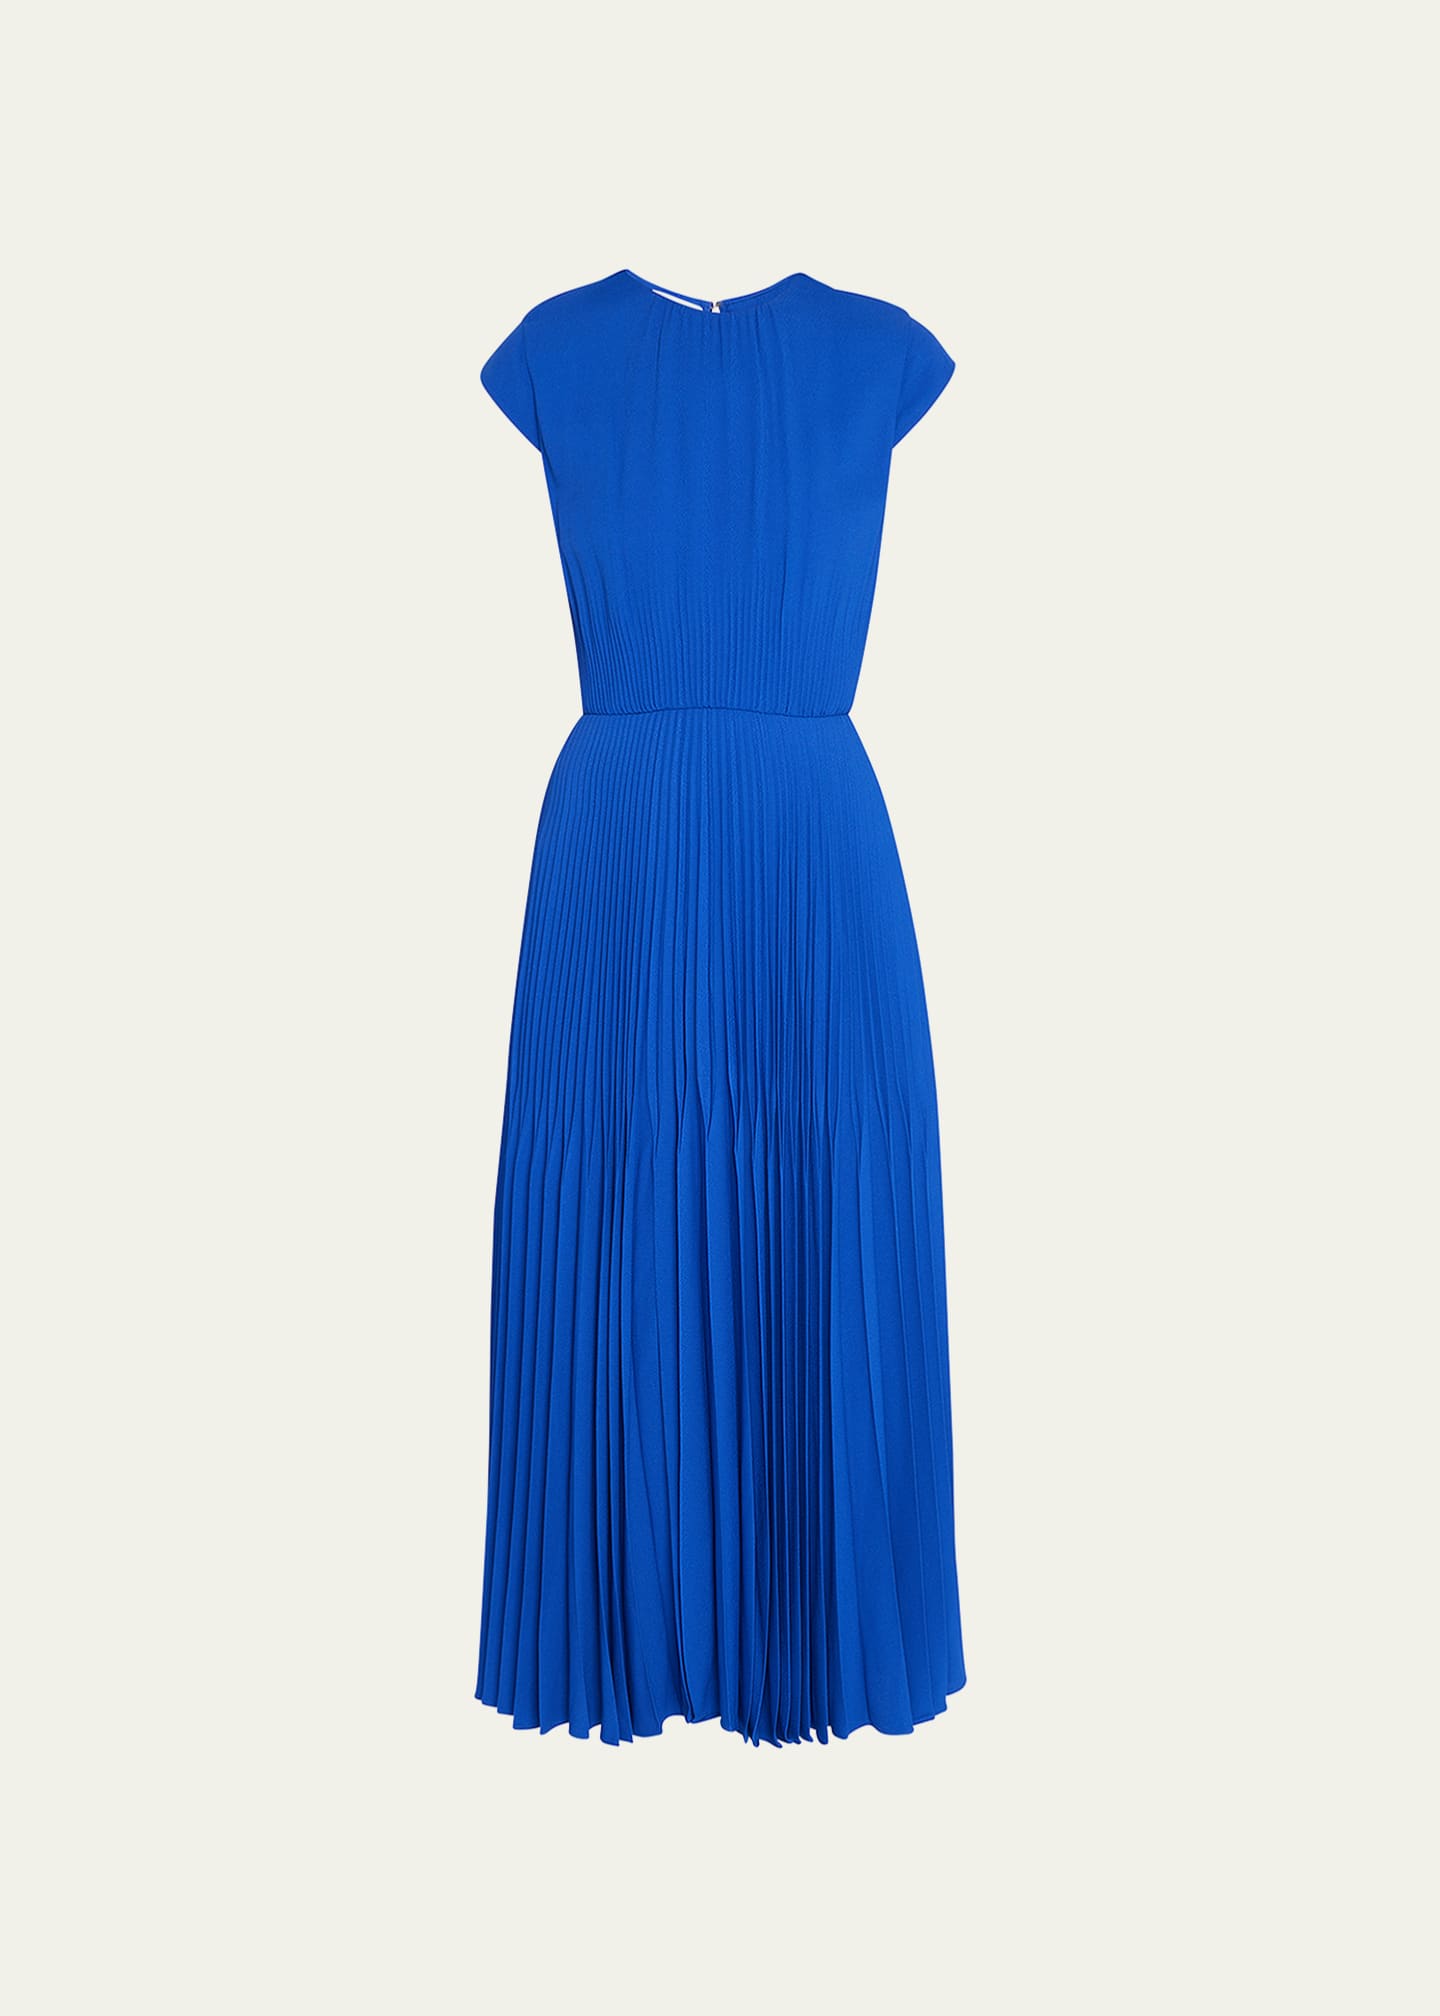 Jason Wu Collection Cap-Sleeve Pleated Midi Dress - Bergdorf Goodman